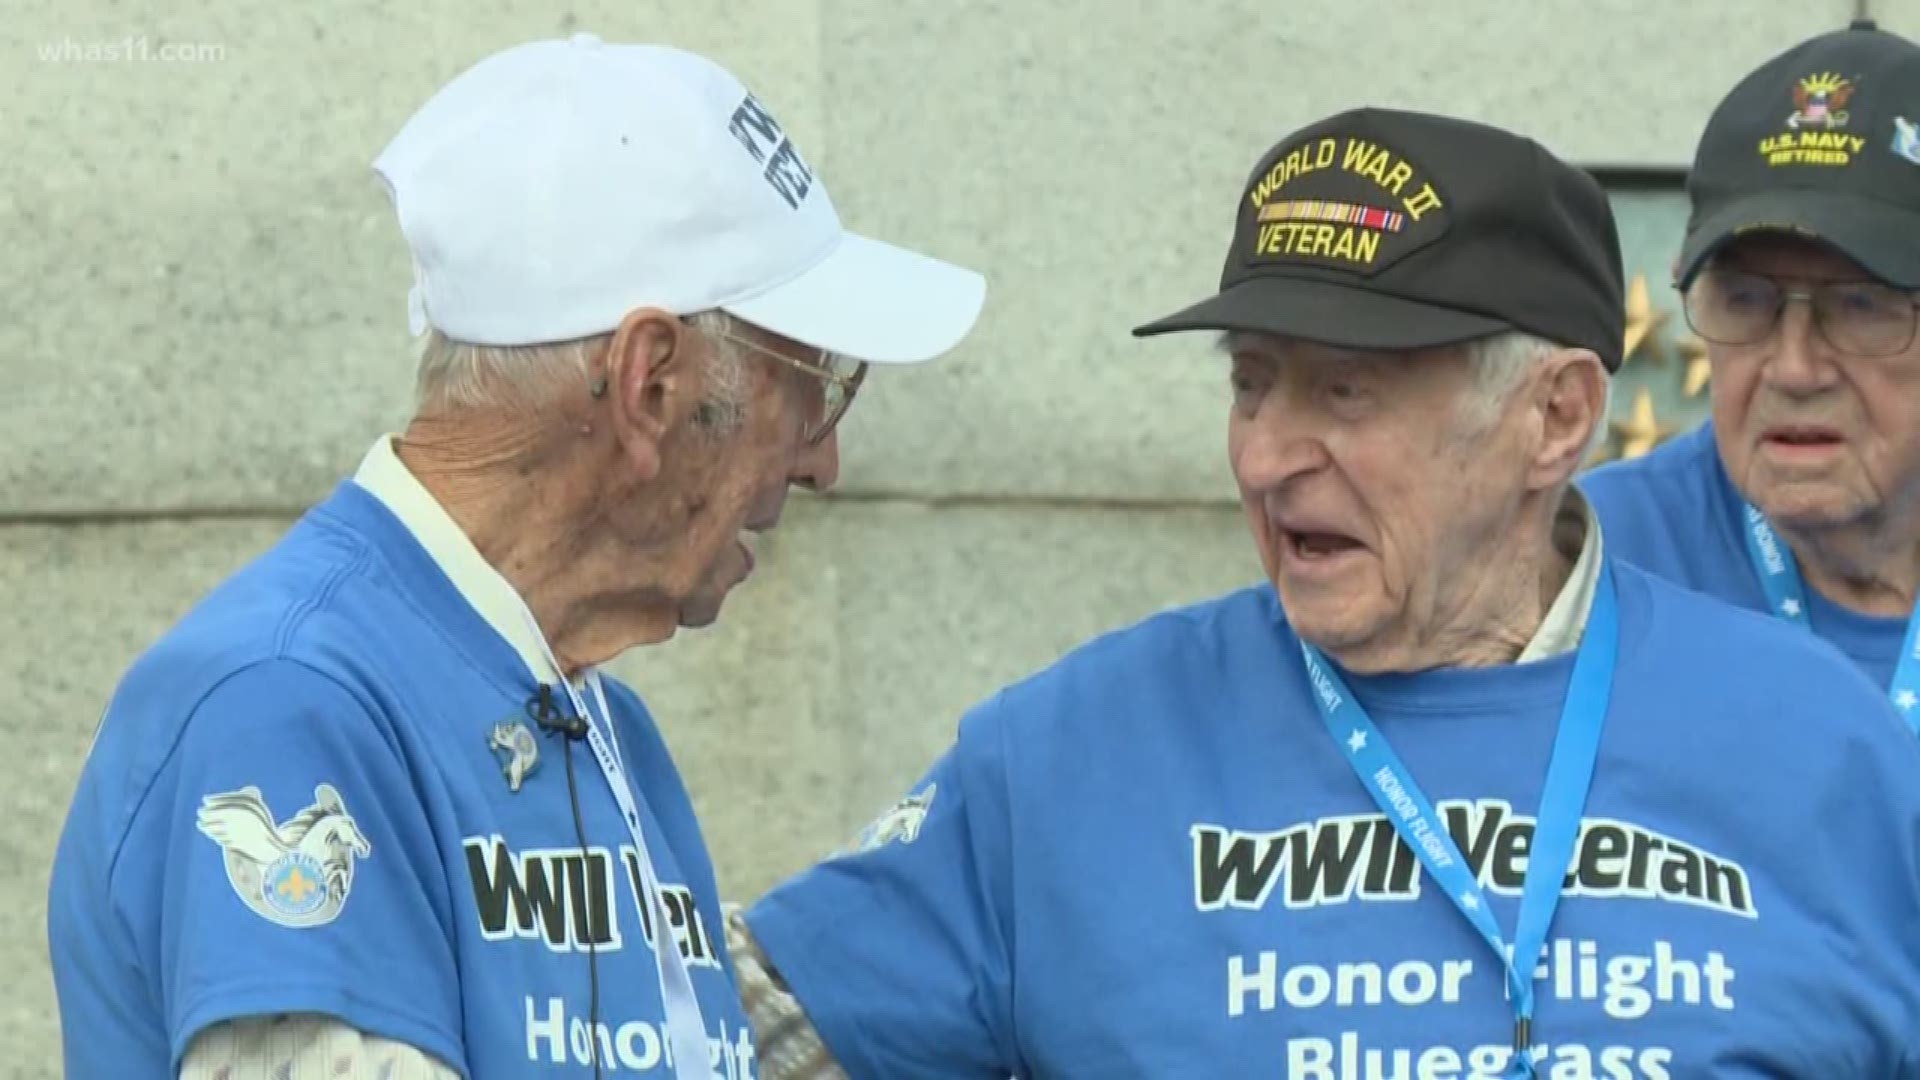 Honor Flight Bluegrass announced a week of appreciation to honor WWII veterans next summer.